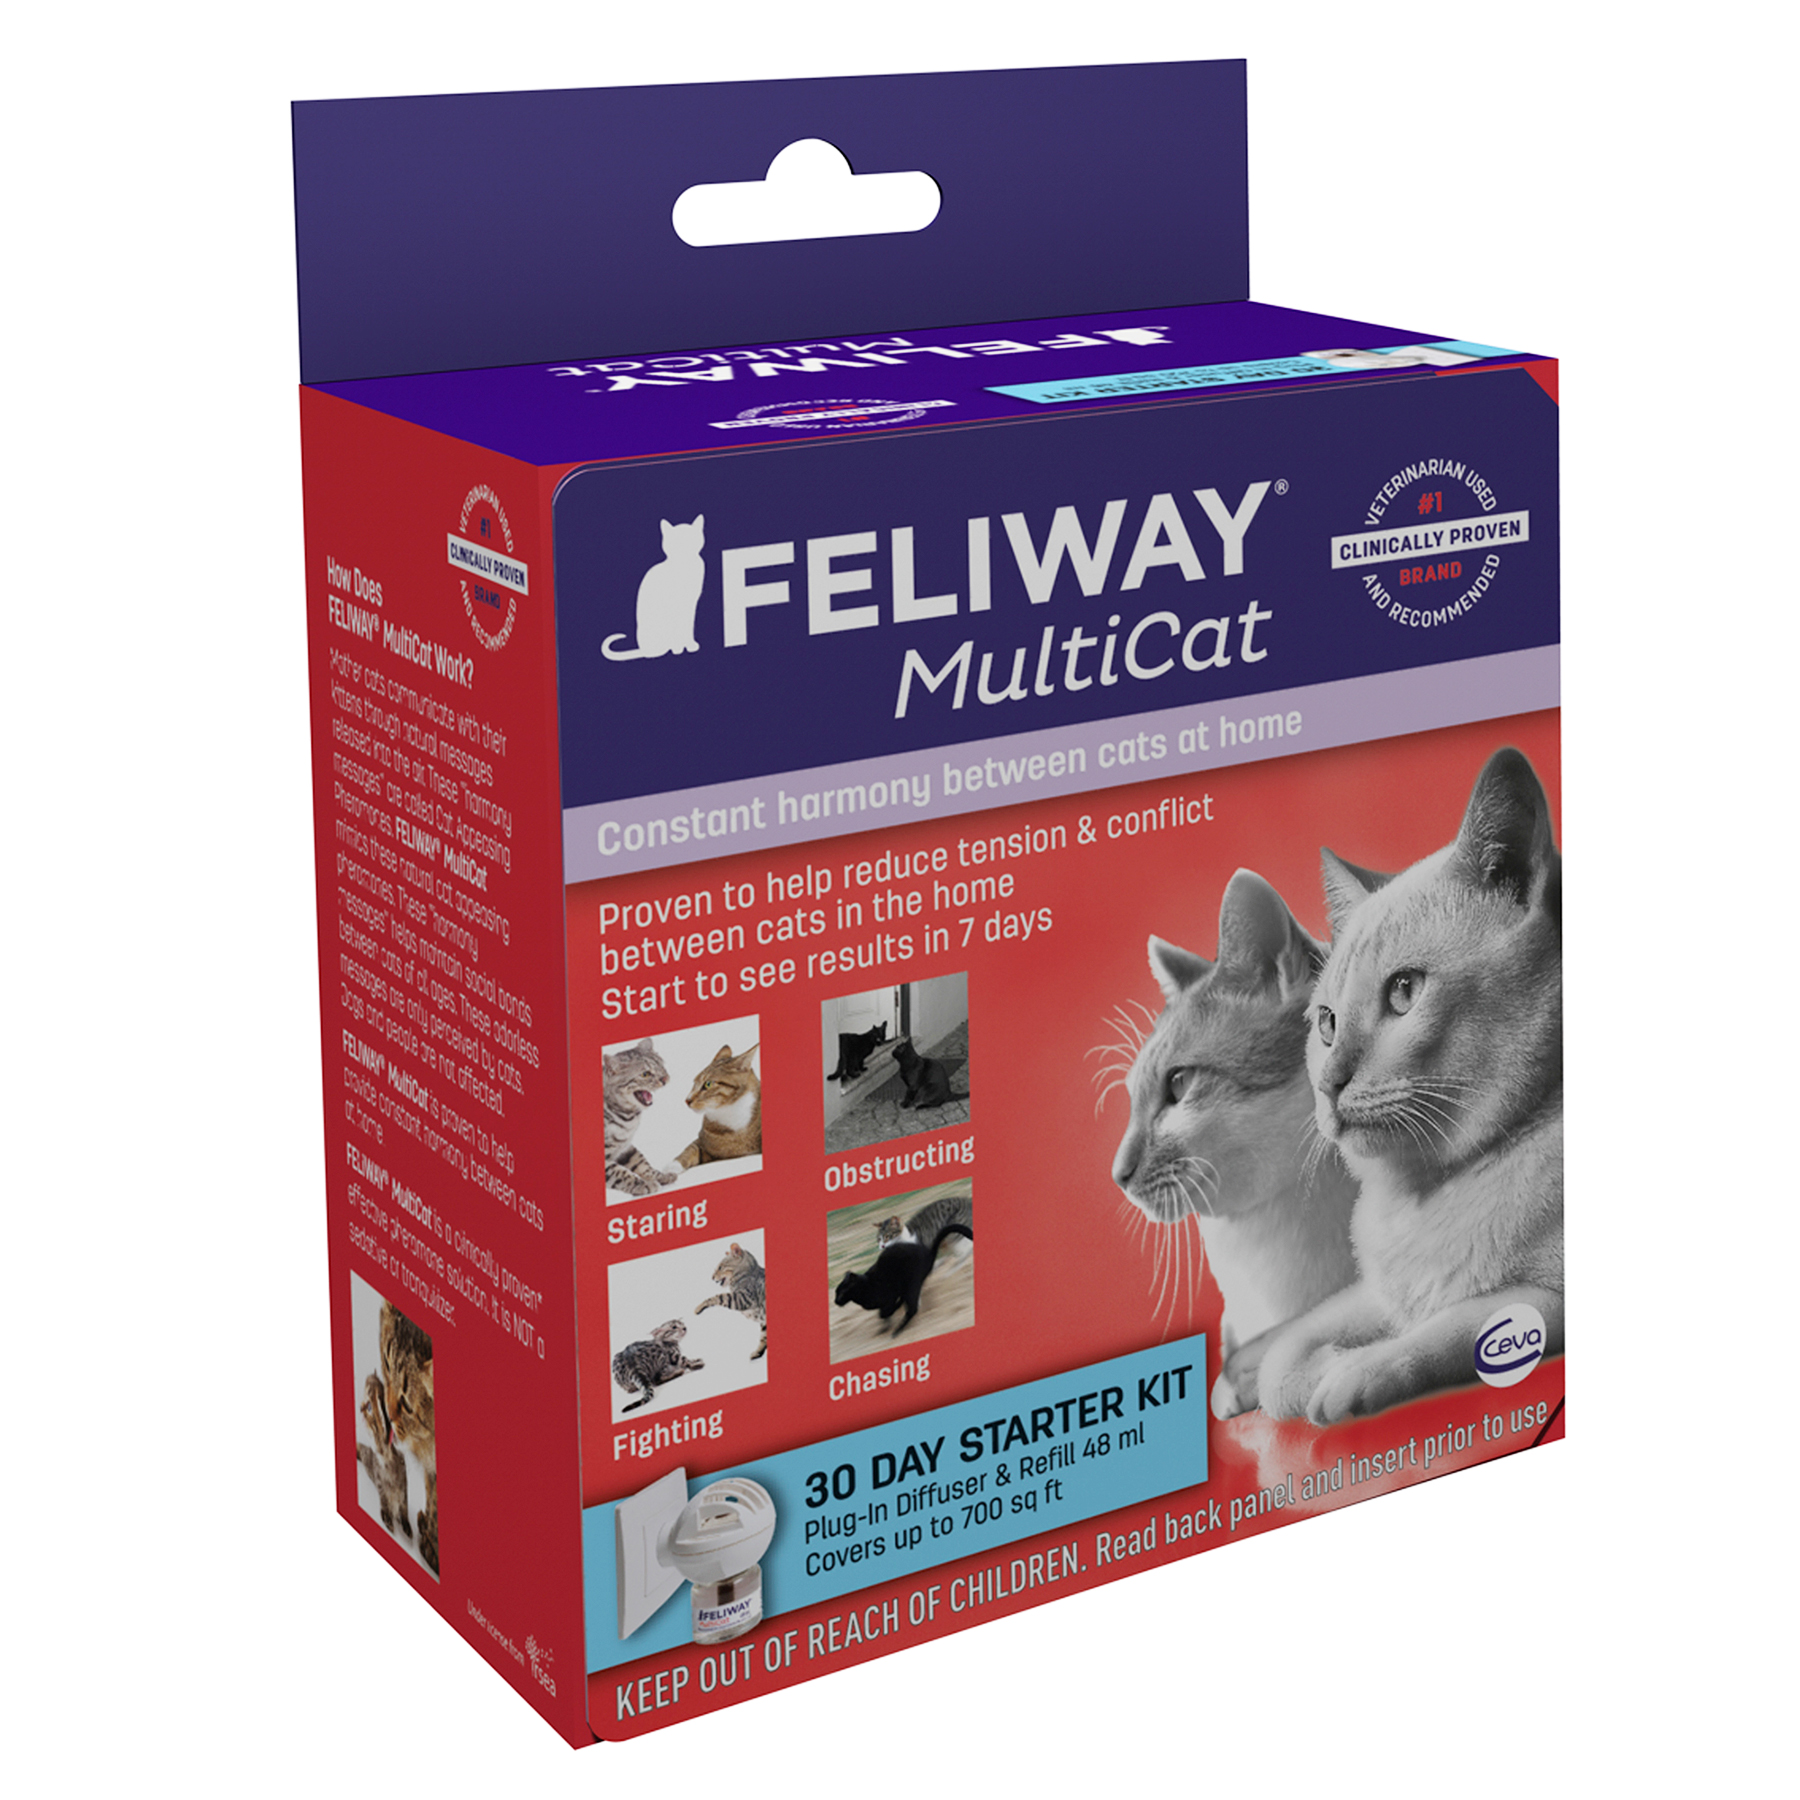 Feliway MultiCat 30 Day Starter Kit Plug-In Diffuser & Refill, 48 mL, Cat - image 2 of 7